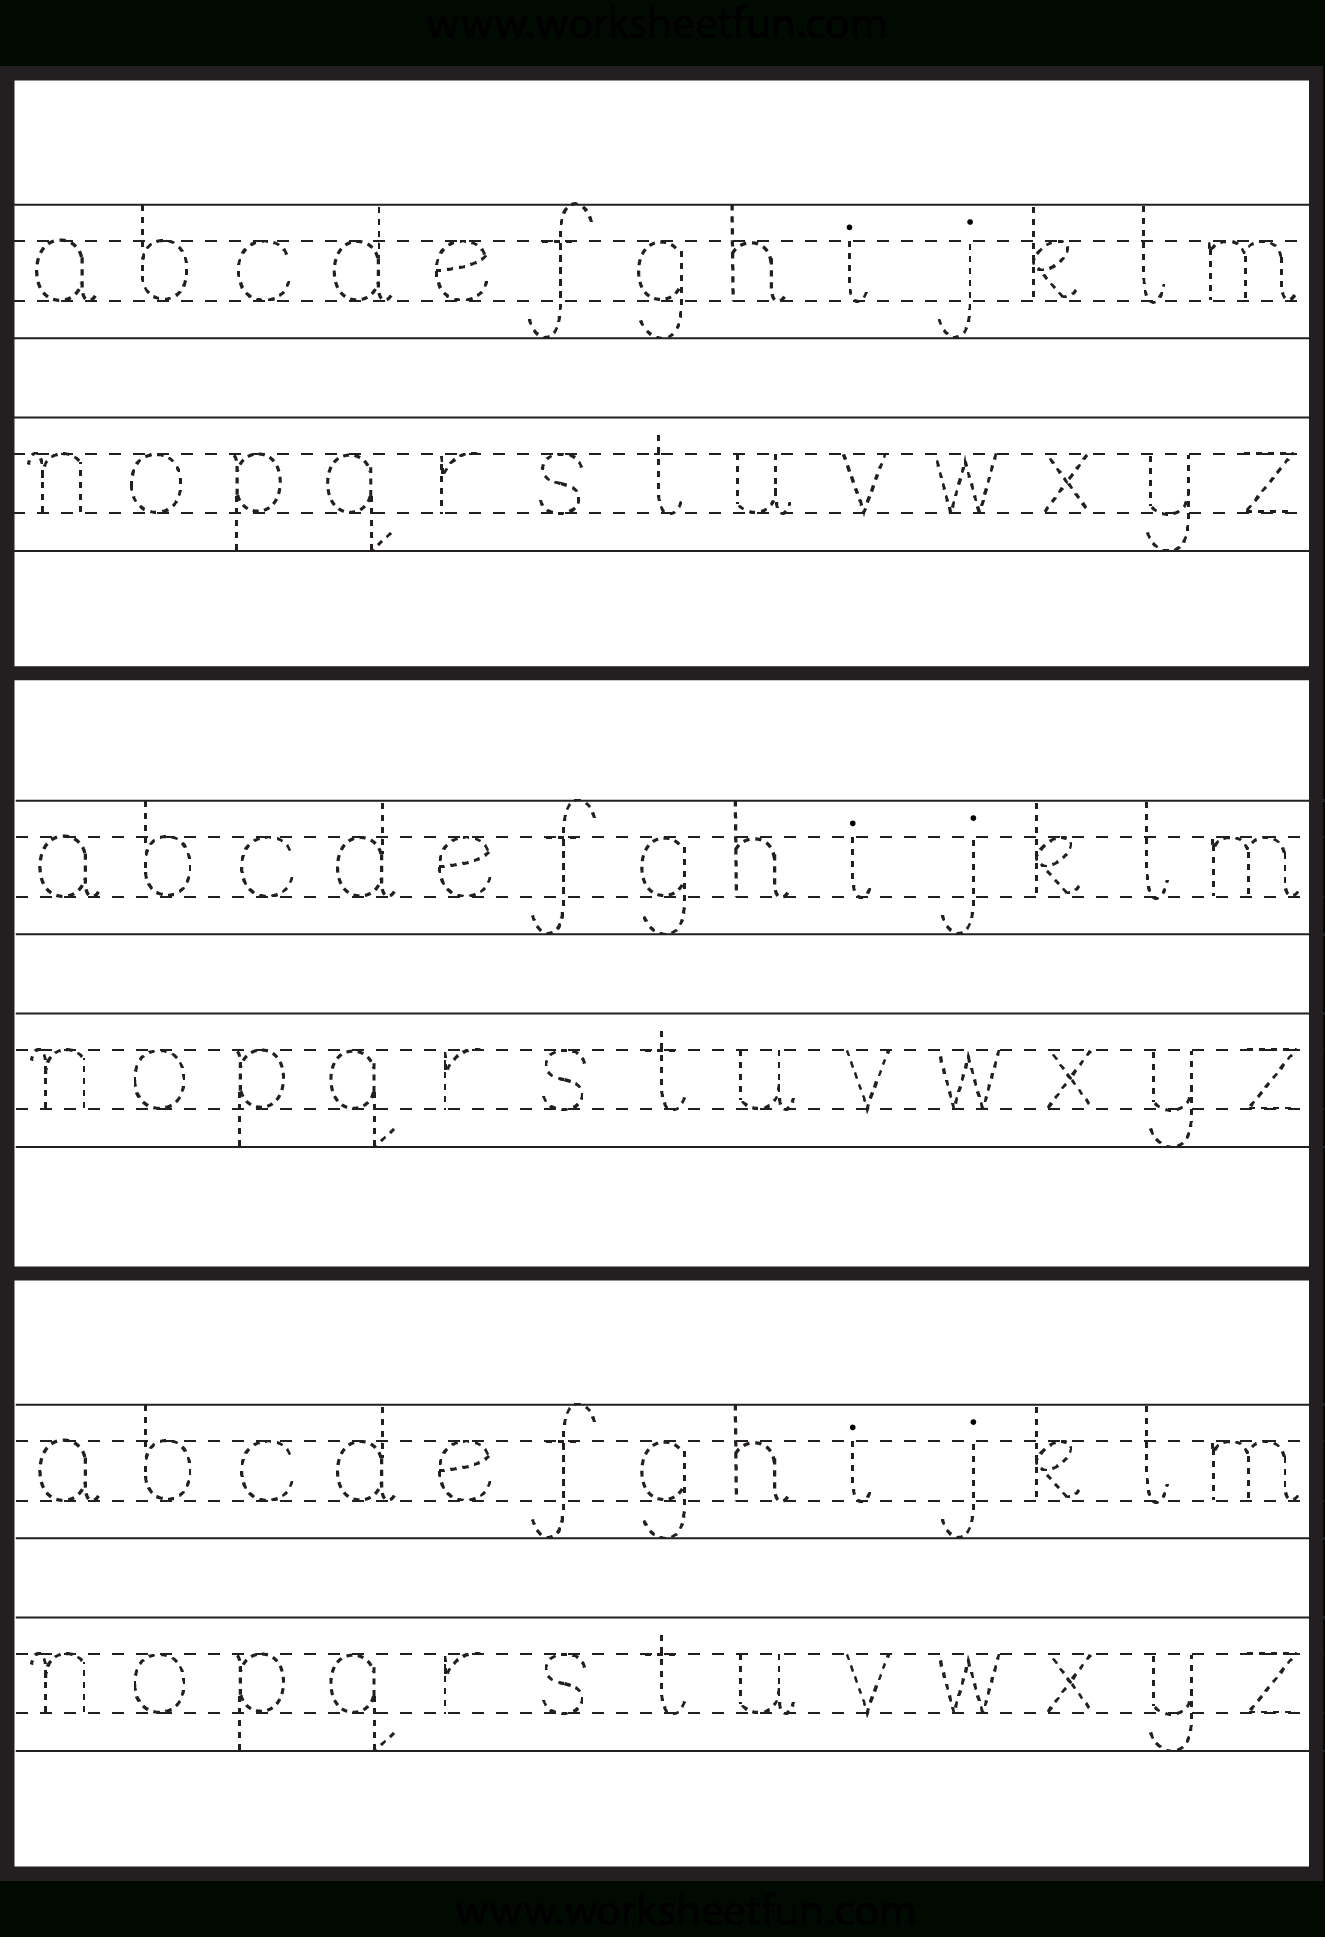 Tracing Alphabet Letters Worksheets Pdf Letter Tracing Worksheets Pdf Free Shaun Keys